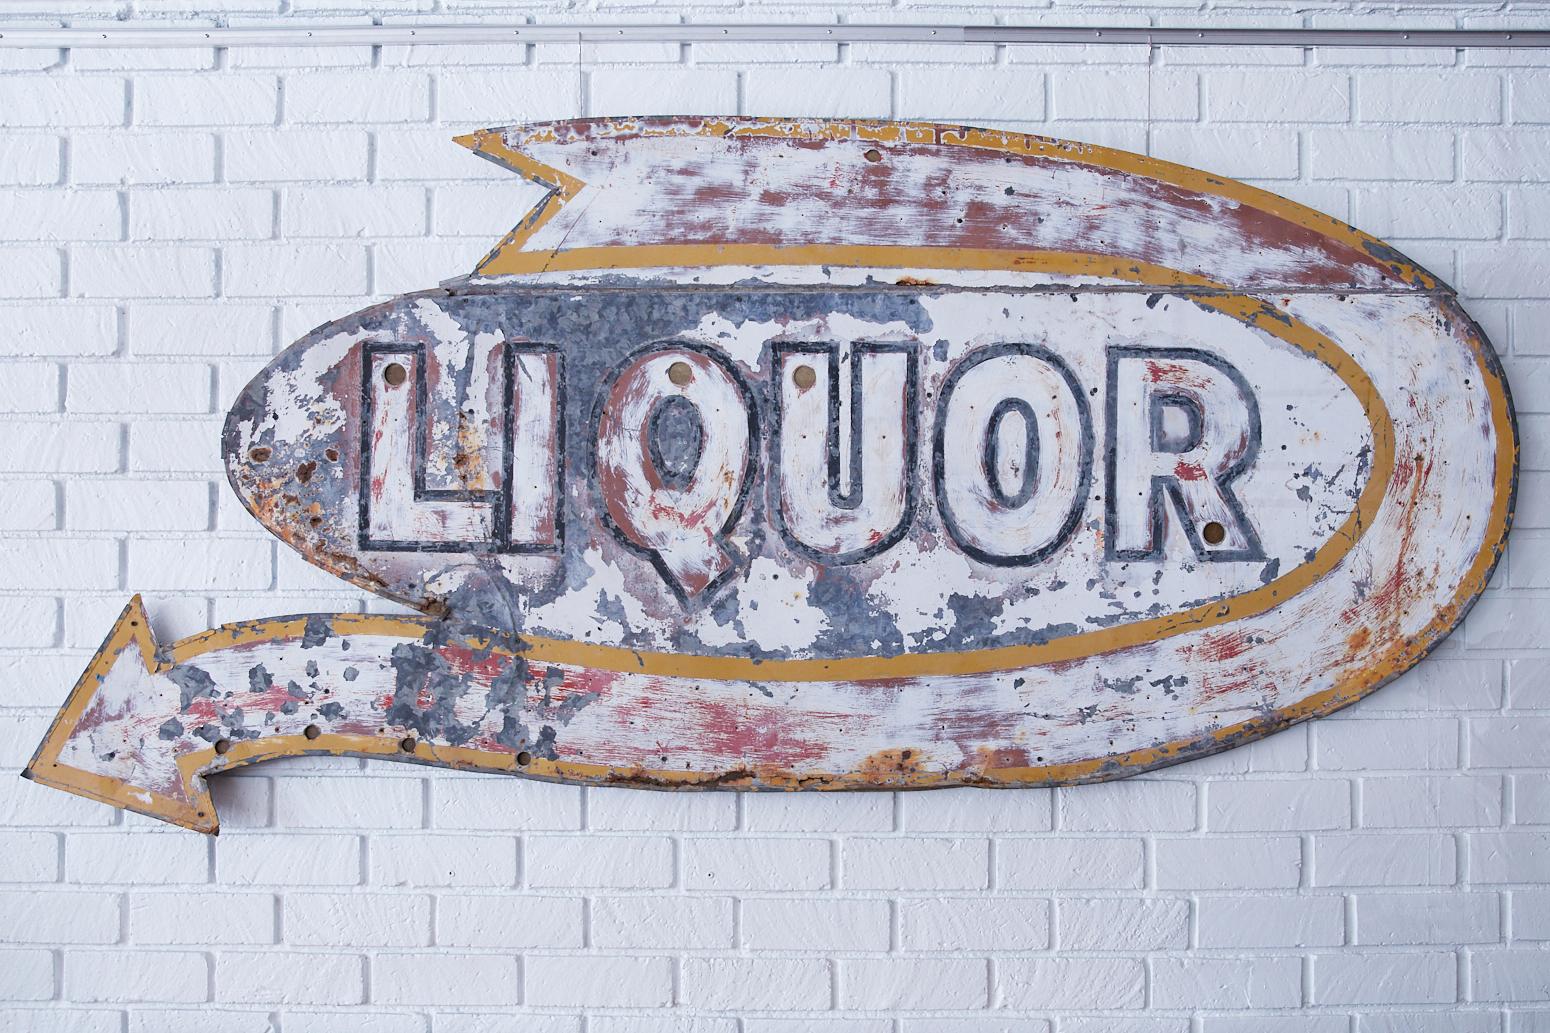 1940s liquor sign massive 1940s metal sign that reads 